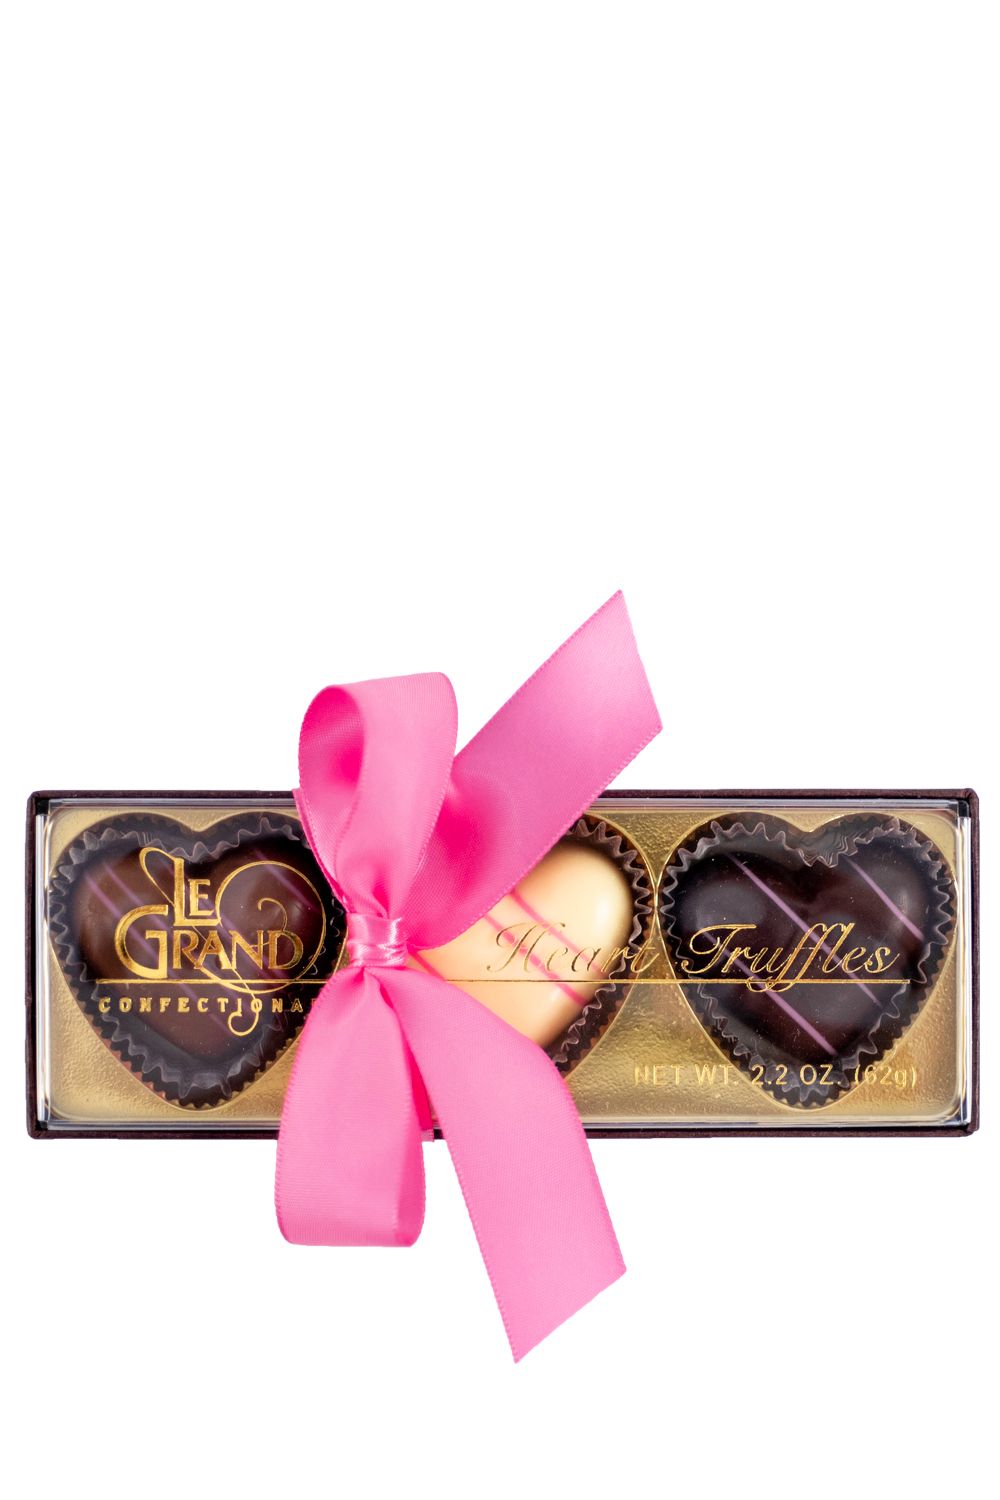 Artisan Chocolate | Gourmet Chocolate | Boutique Chocolate | Belgian Chocolate | Wholesale Chocolate | Valentine 3-Piece Chocolate Hearts | Chocolate Truffles | Ticket Chocolate | Valentine's Day Chocolate | Gift